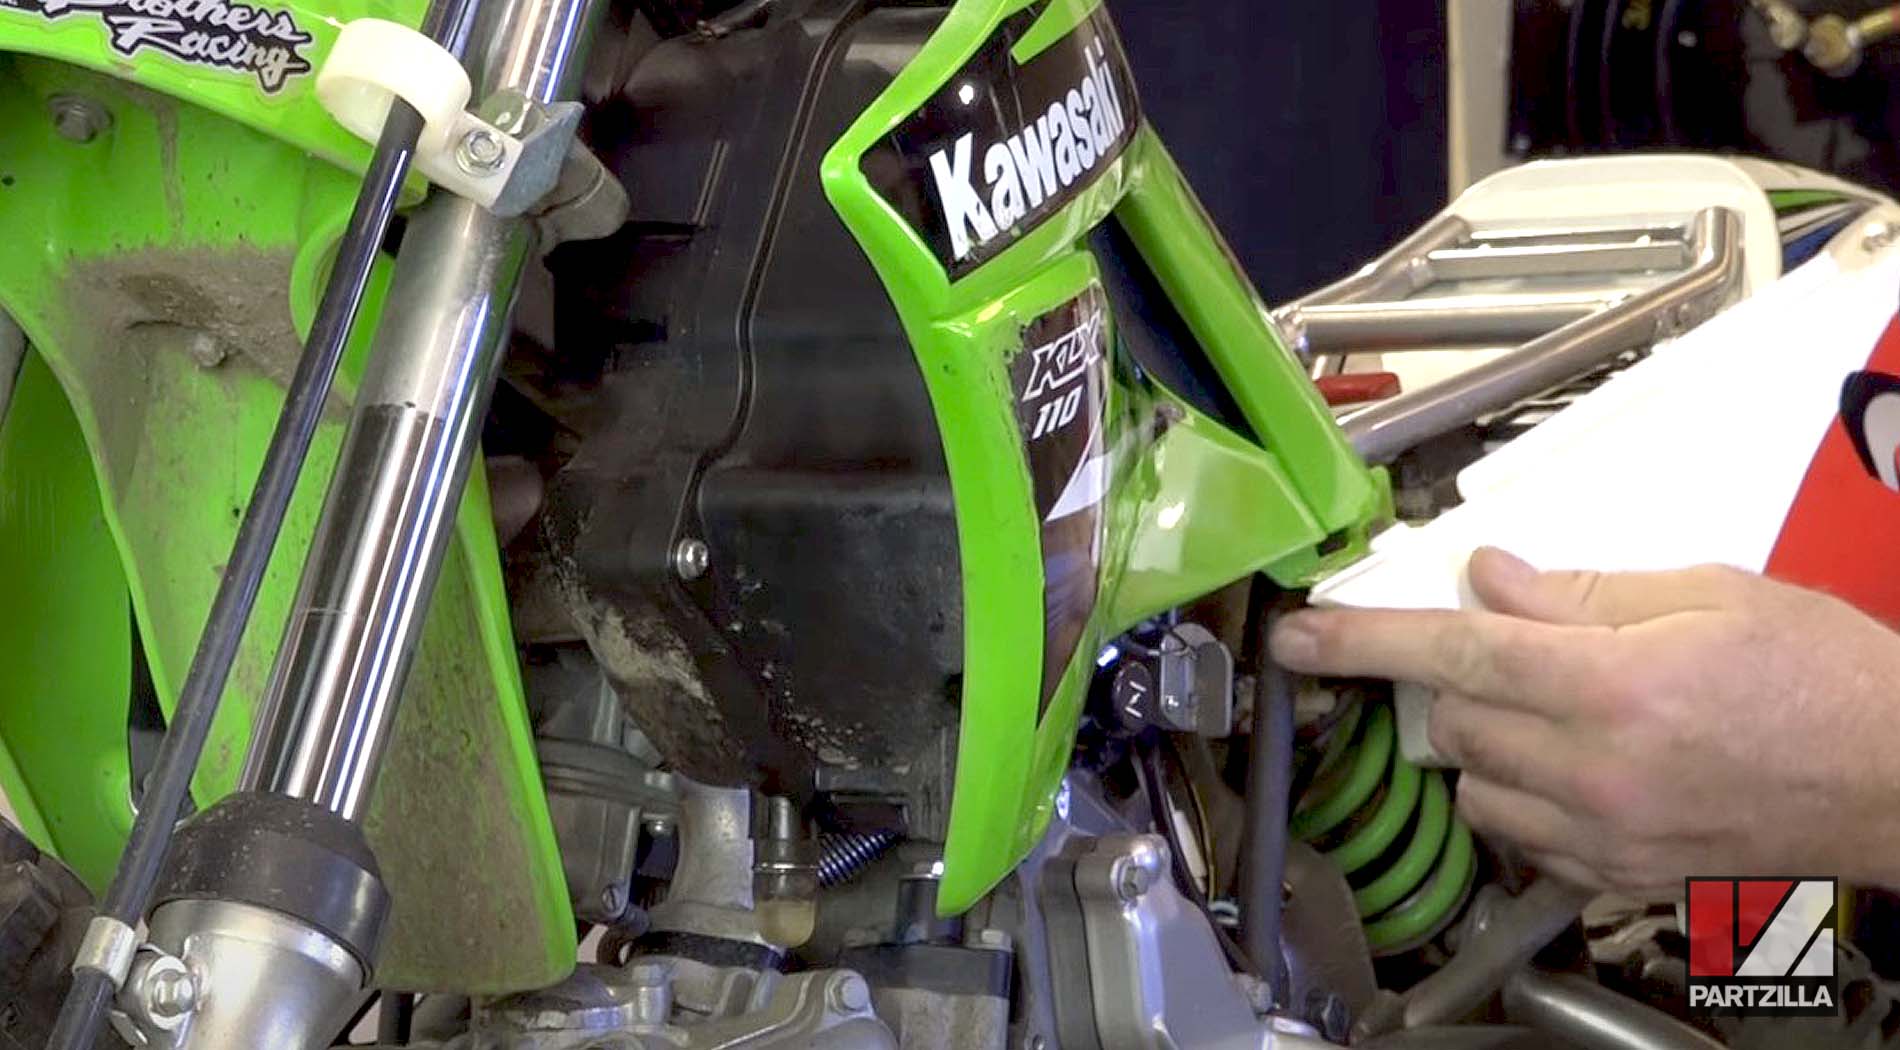 Kawasaki KLX 110 dirt bike air filter replacement